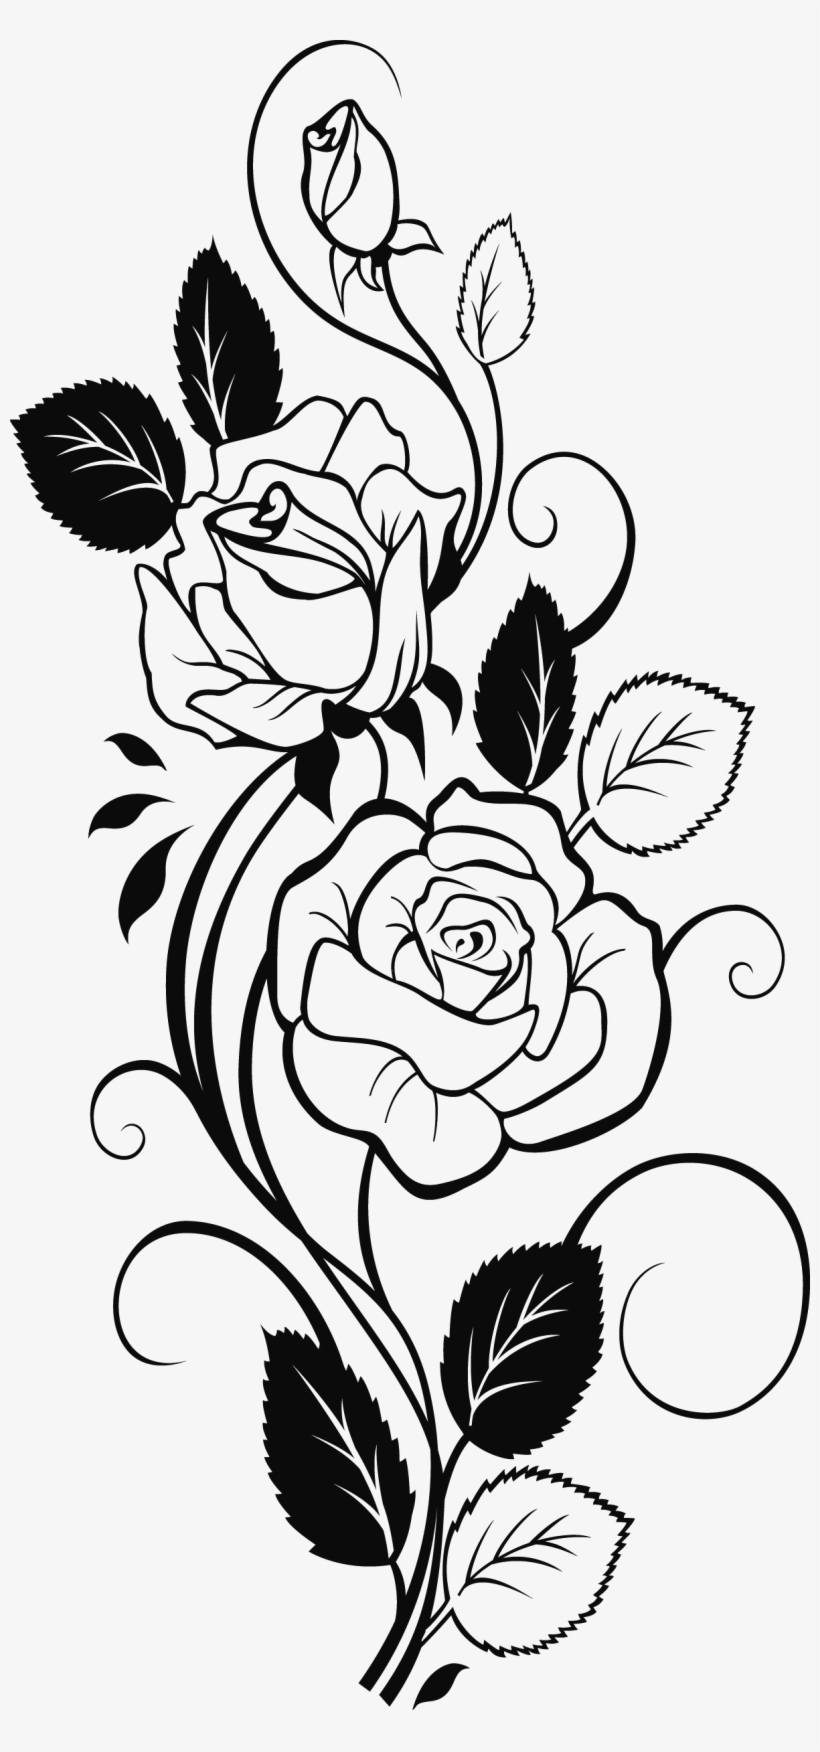 0 Cc6b5 917fb53d Orig - Design Flower Rose Drawing, transparent png #104263